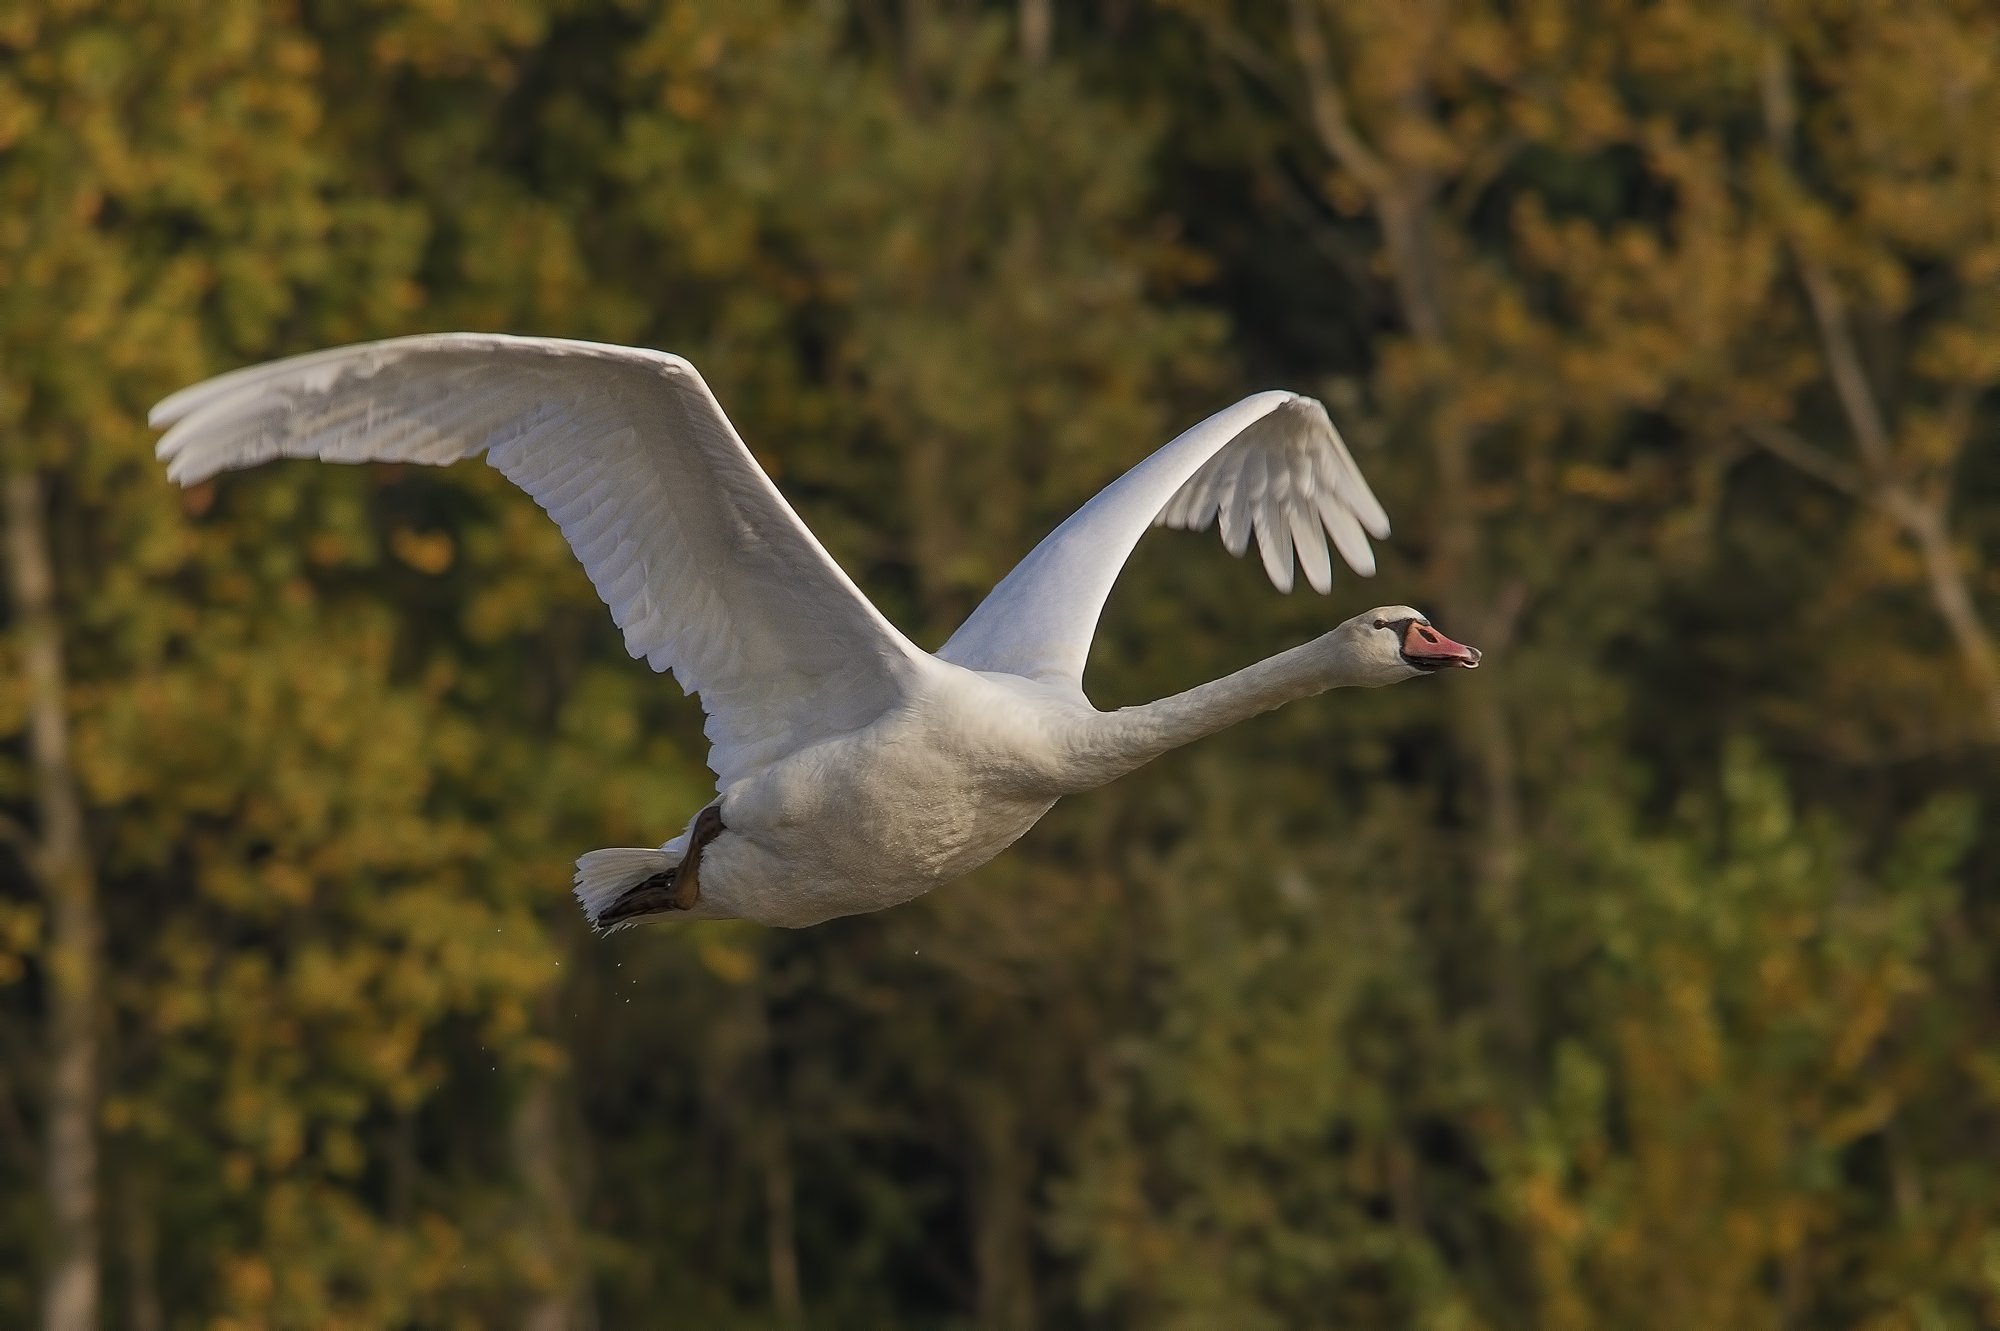 Swan in freedom....